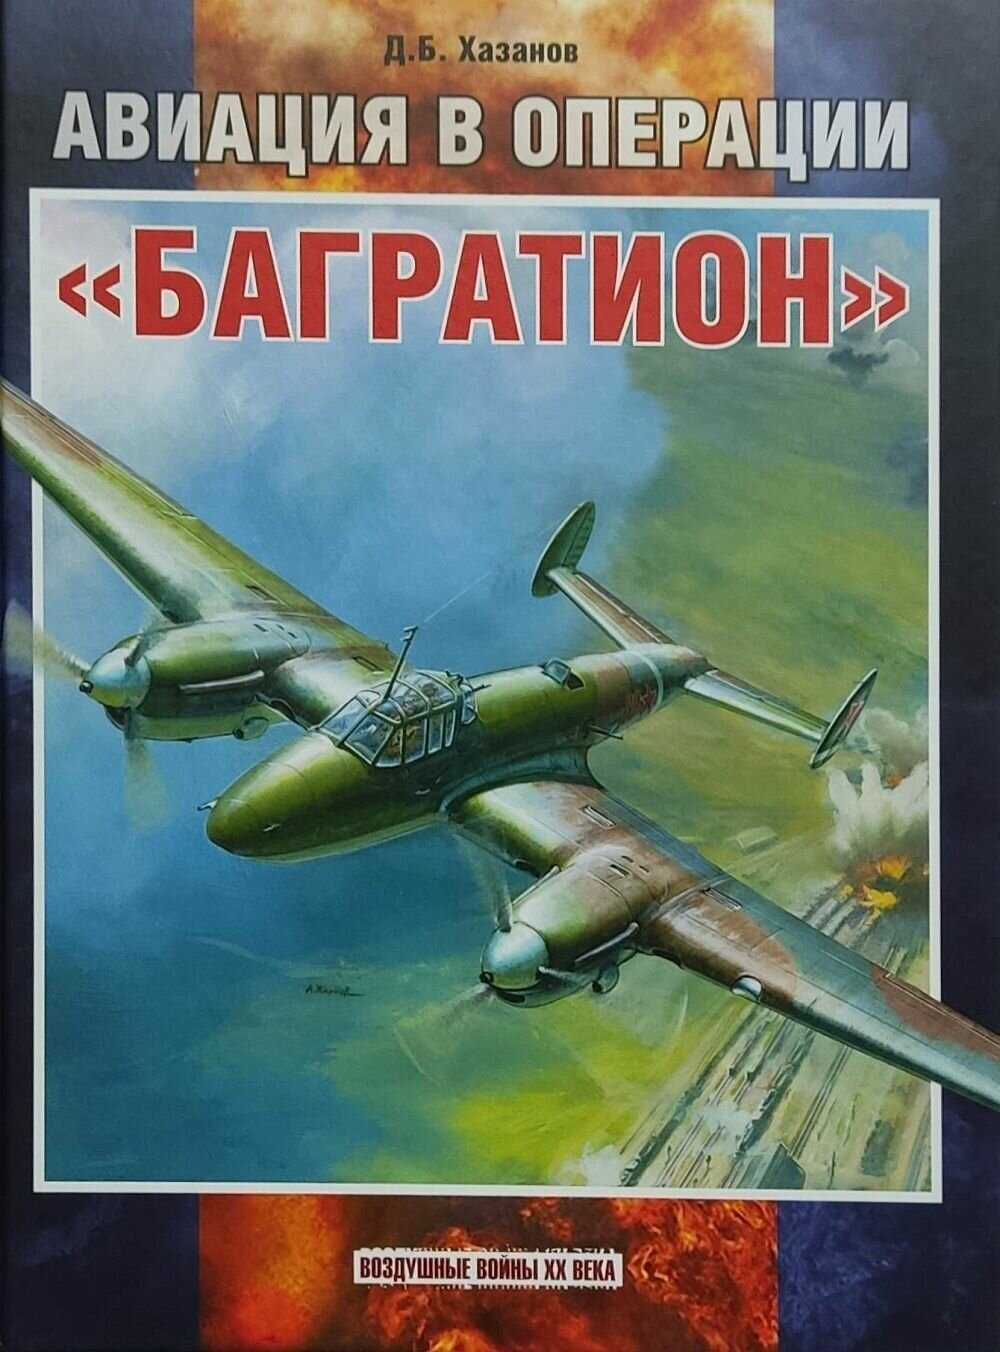 Авиация в операции "Багратион" - фото №1